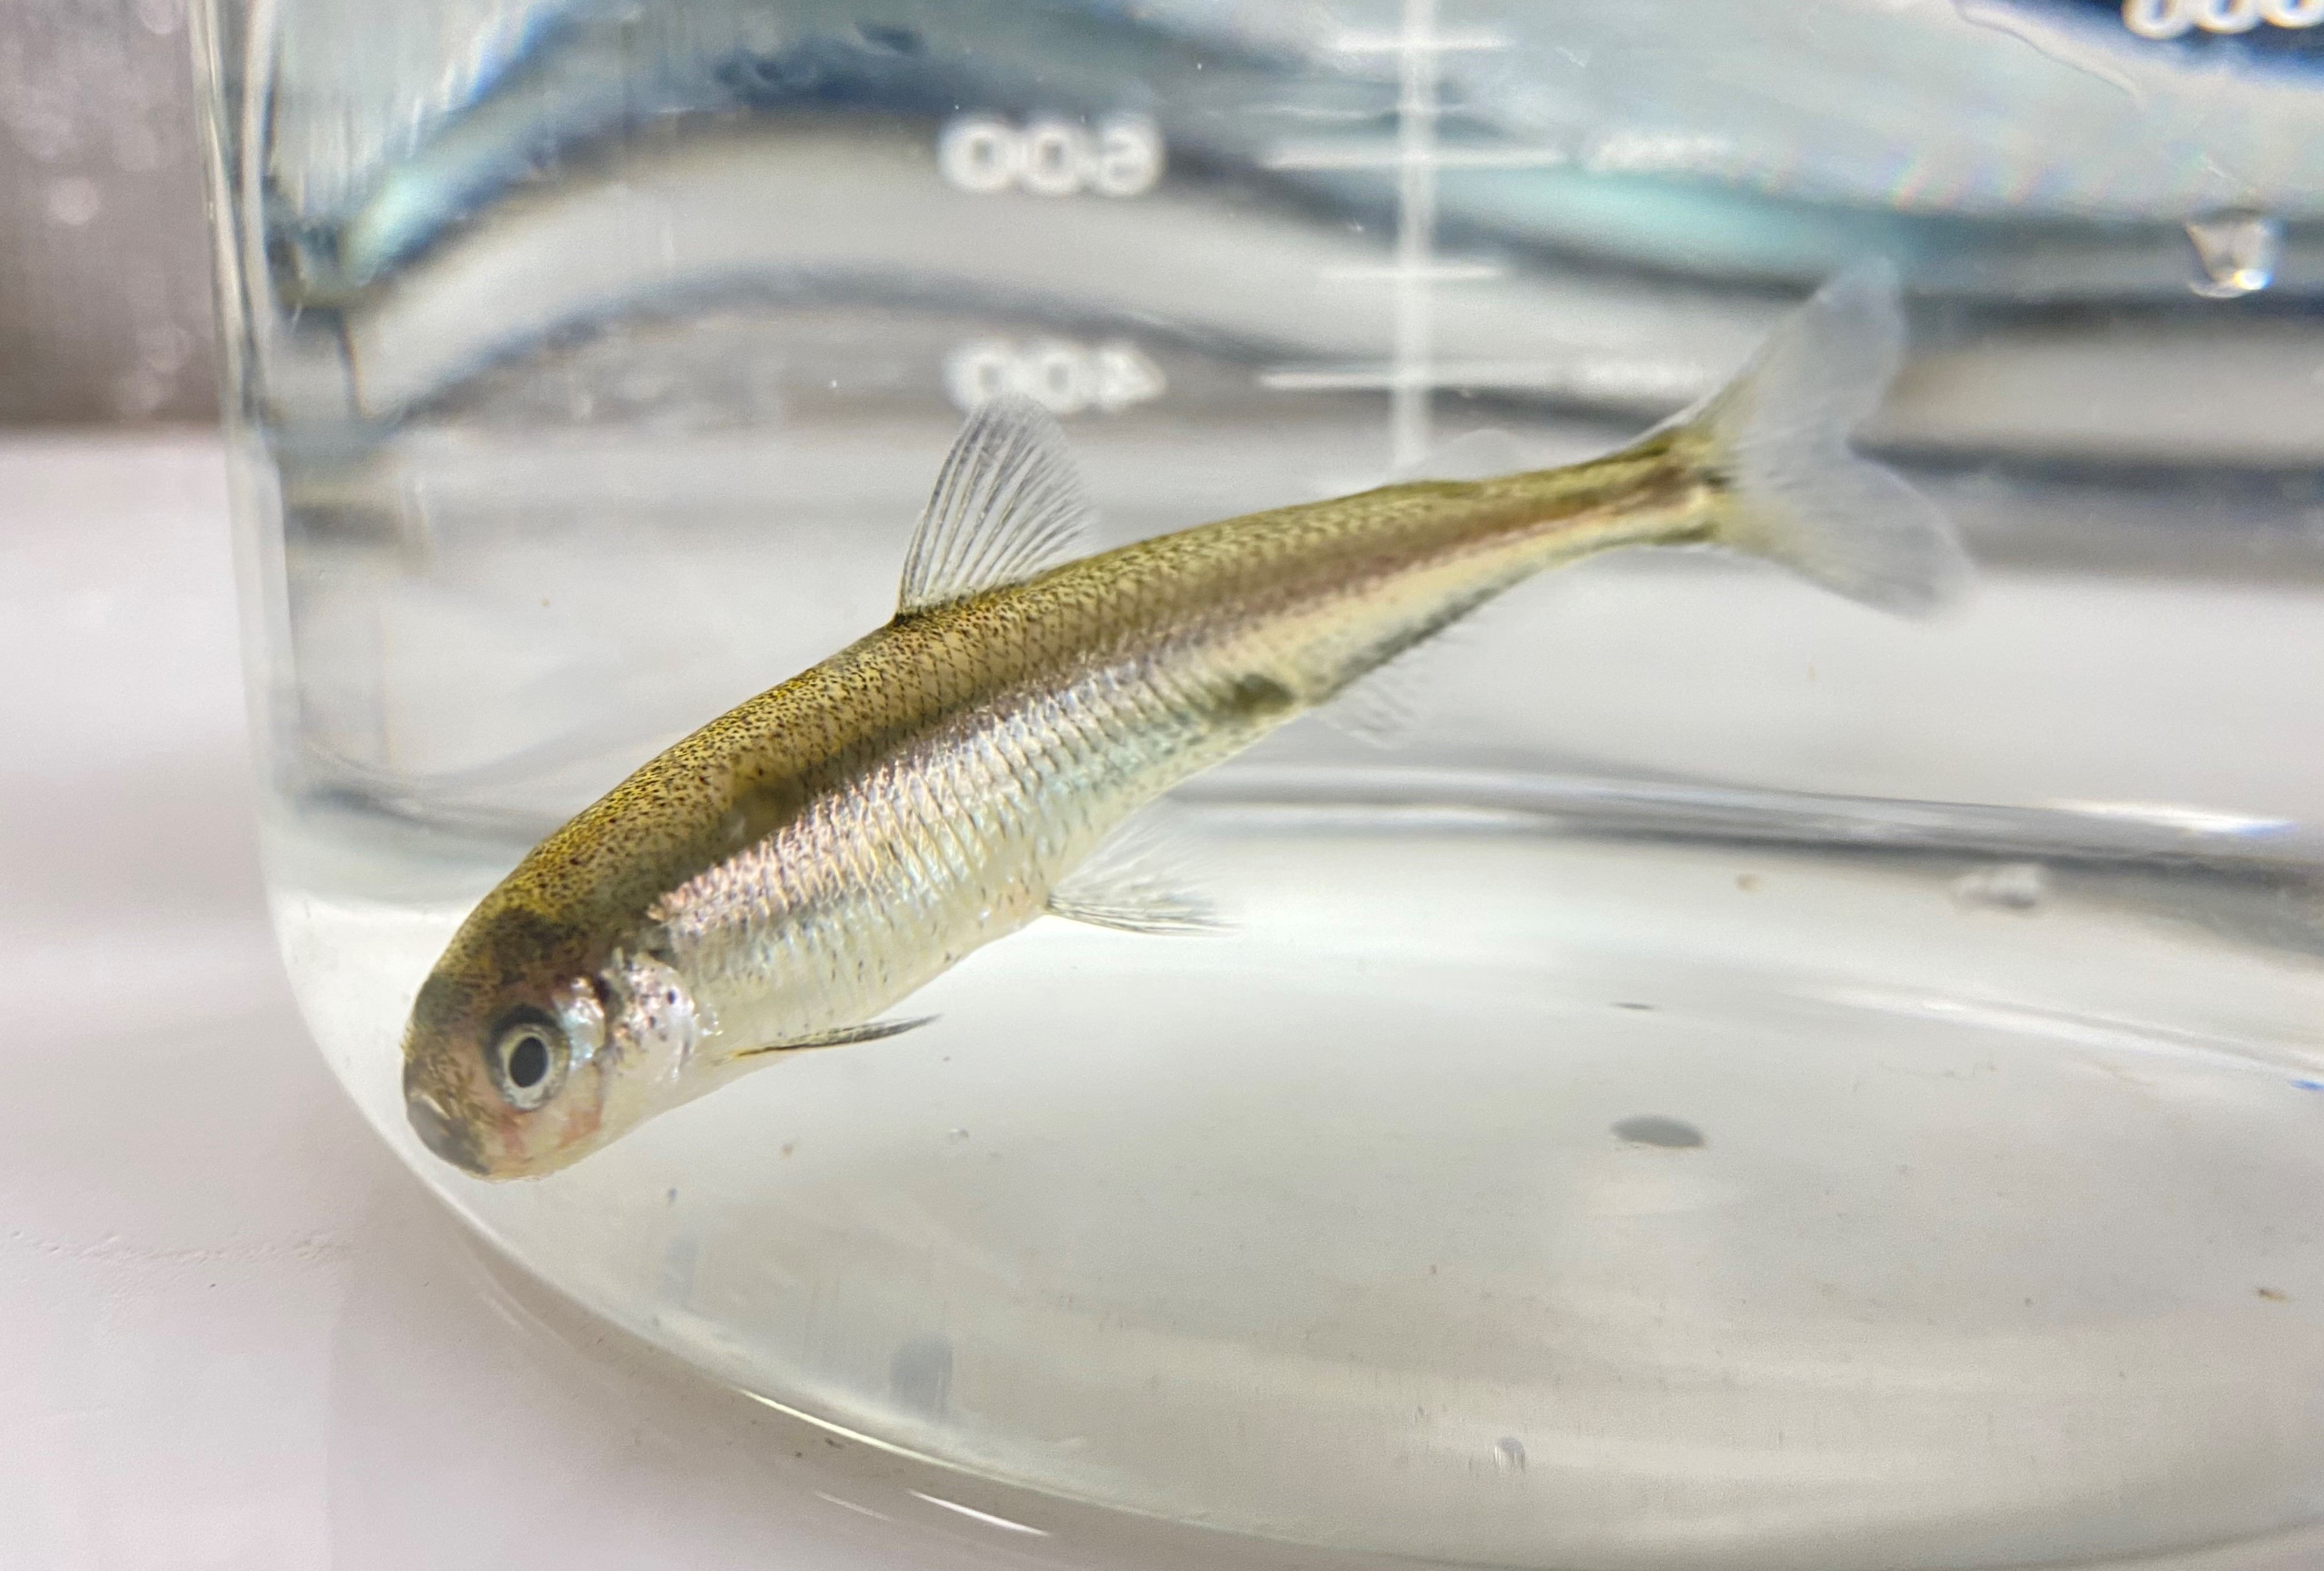 Small golden fish inside of a beaker